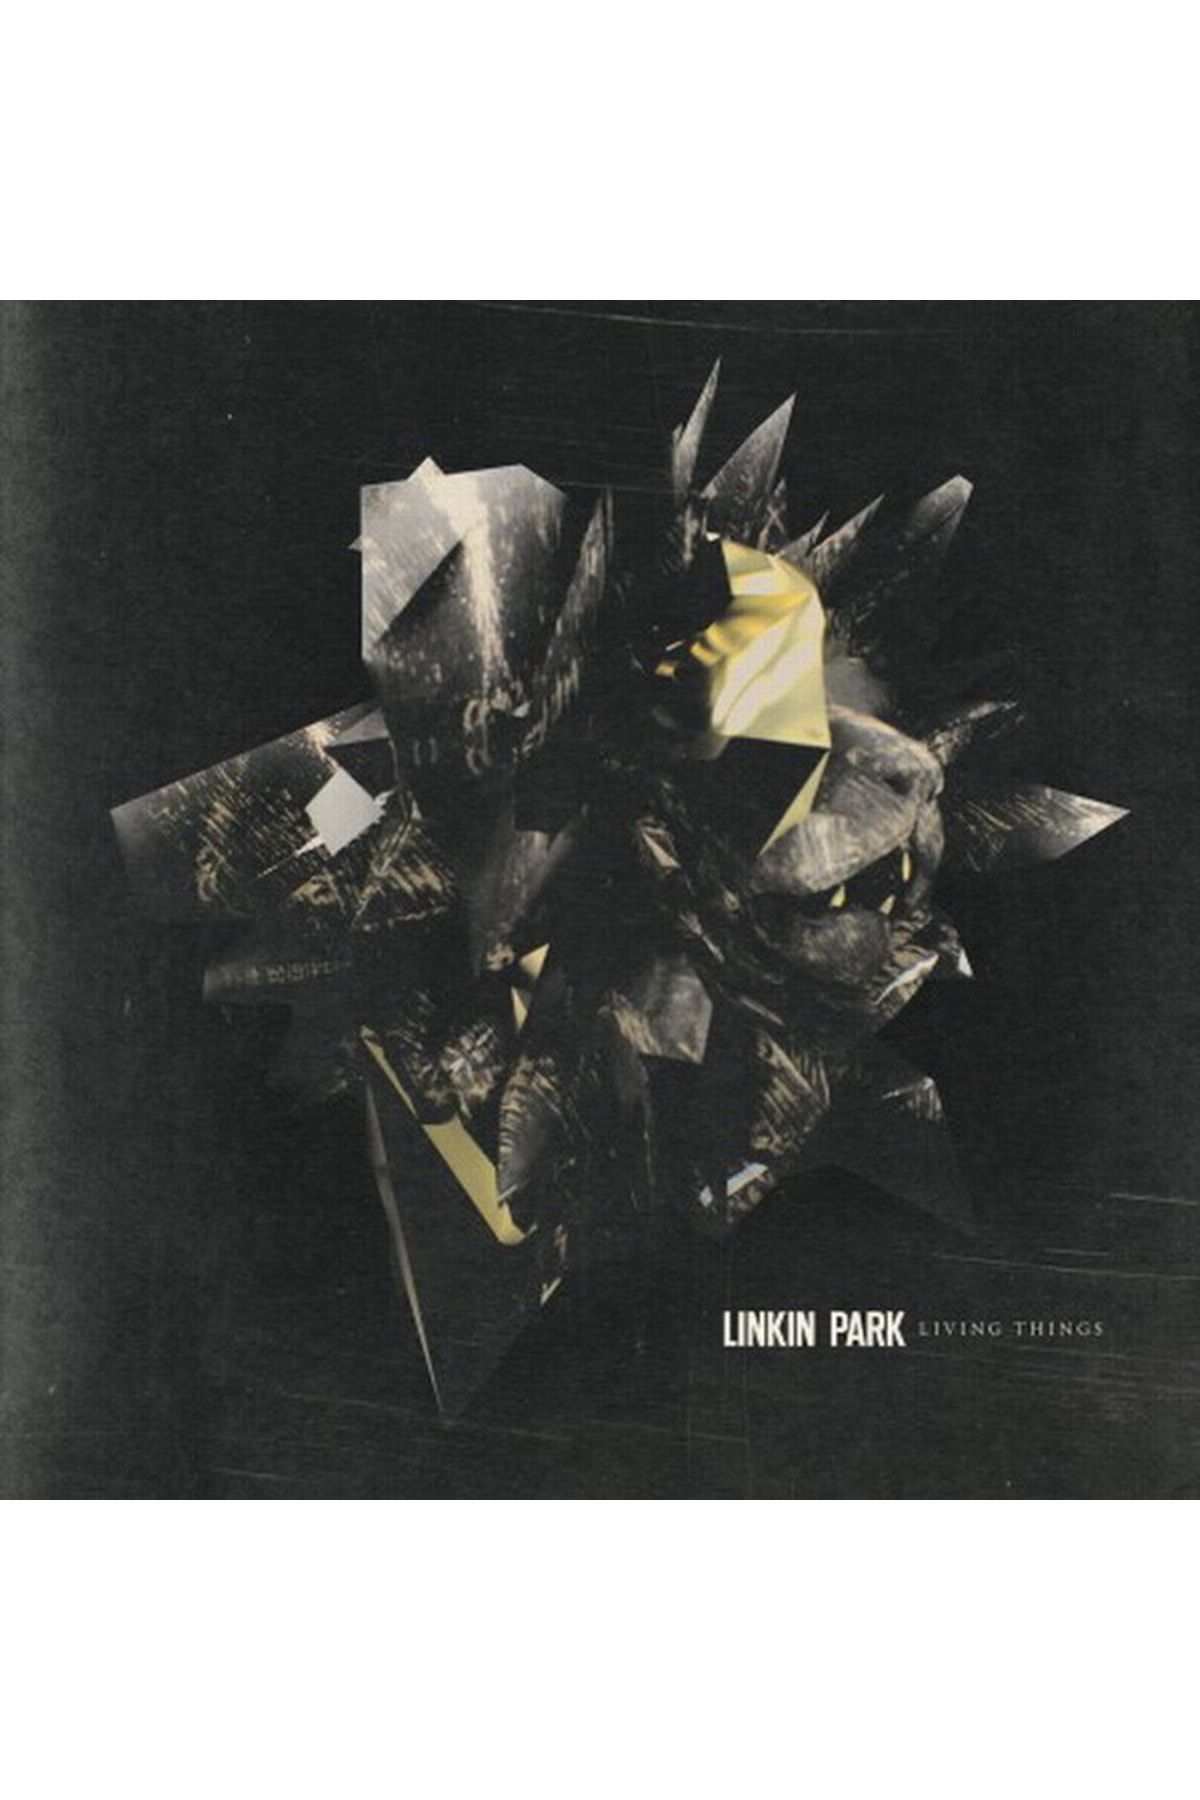 Linkin Park - Living Things (Vinyl LP)